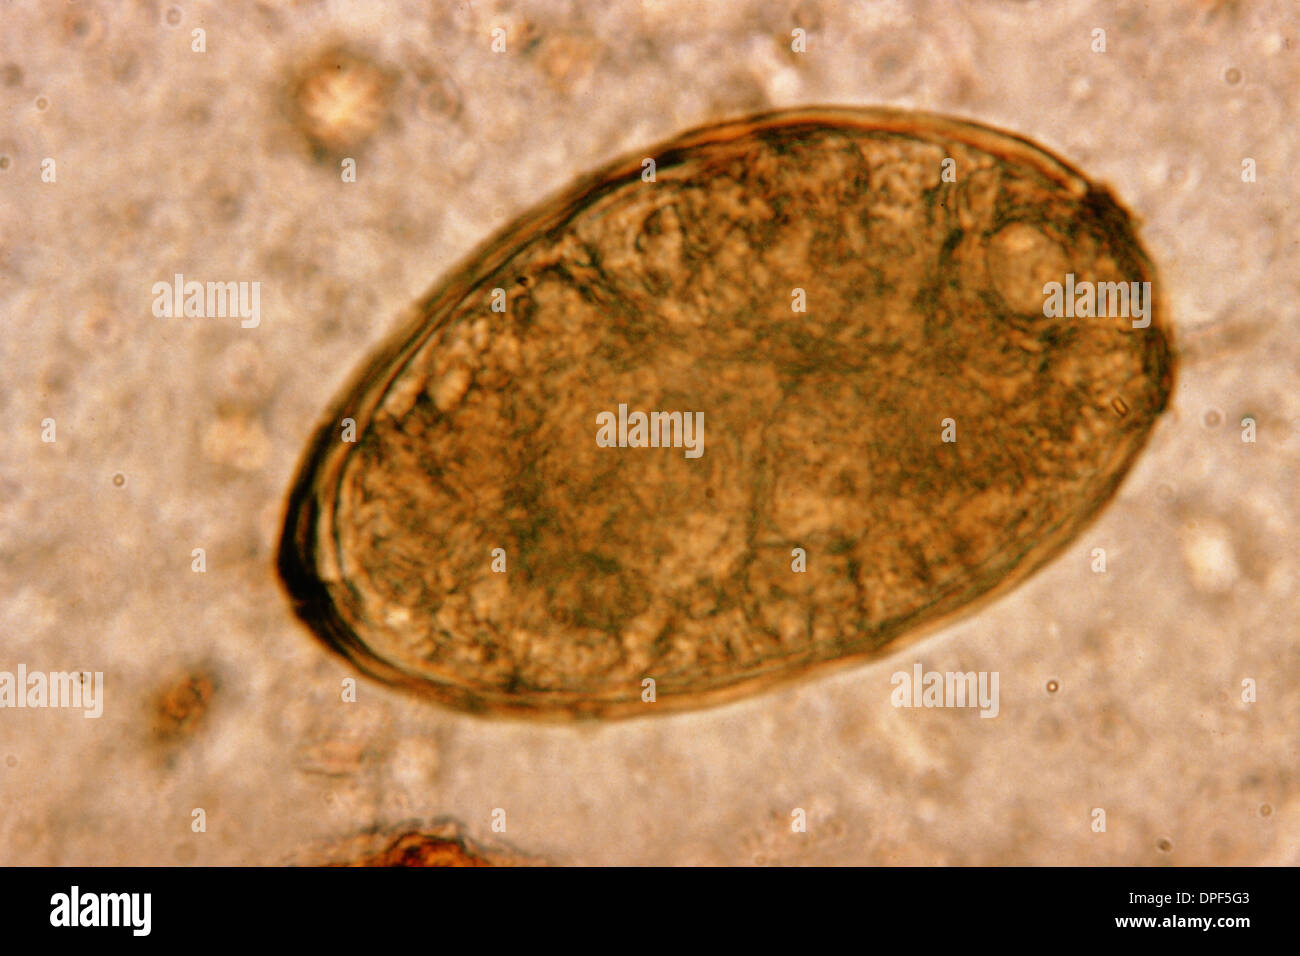 Light micrograph Trematode lung fluke egg Stock Photo